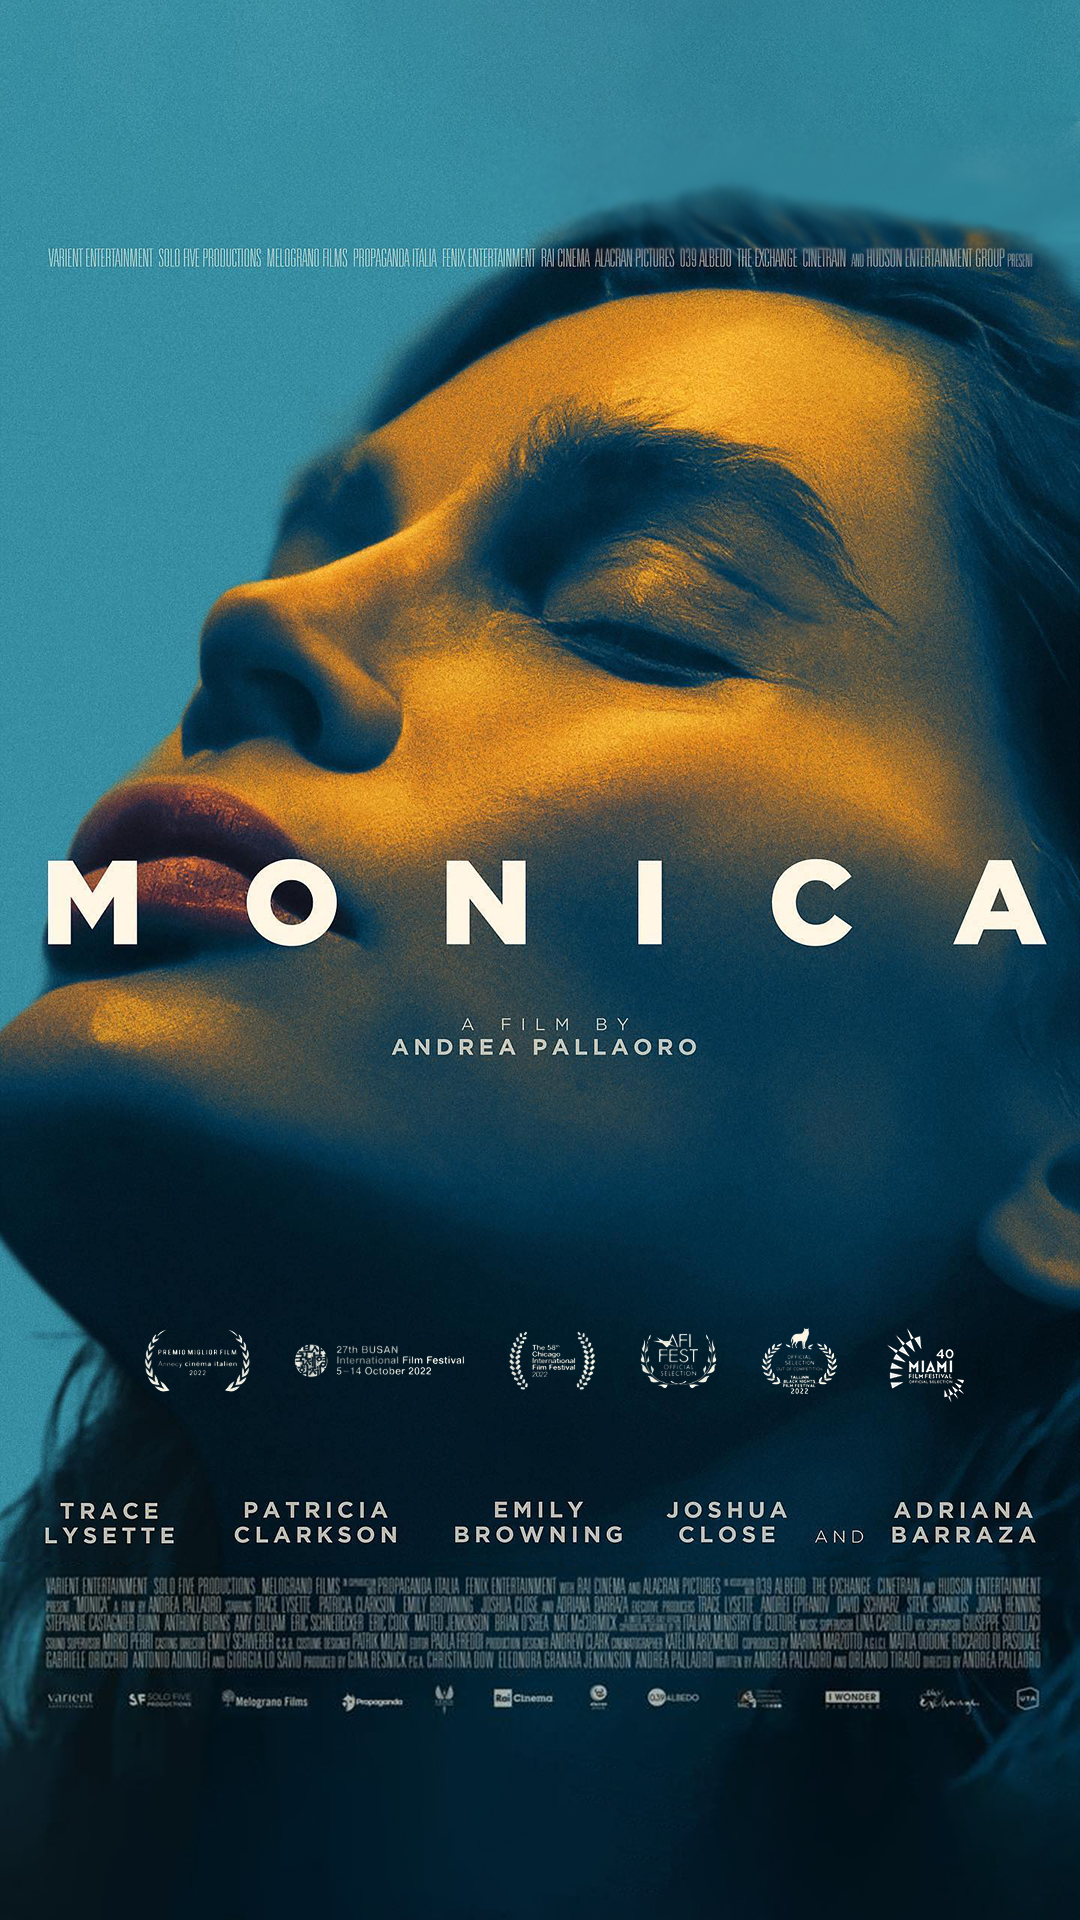 606 pickups UK Distribution Of Andrea Pallaoro's "Monica"